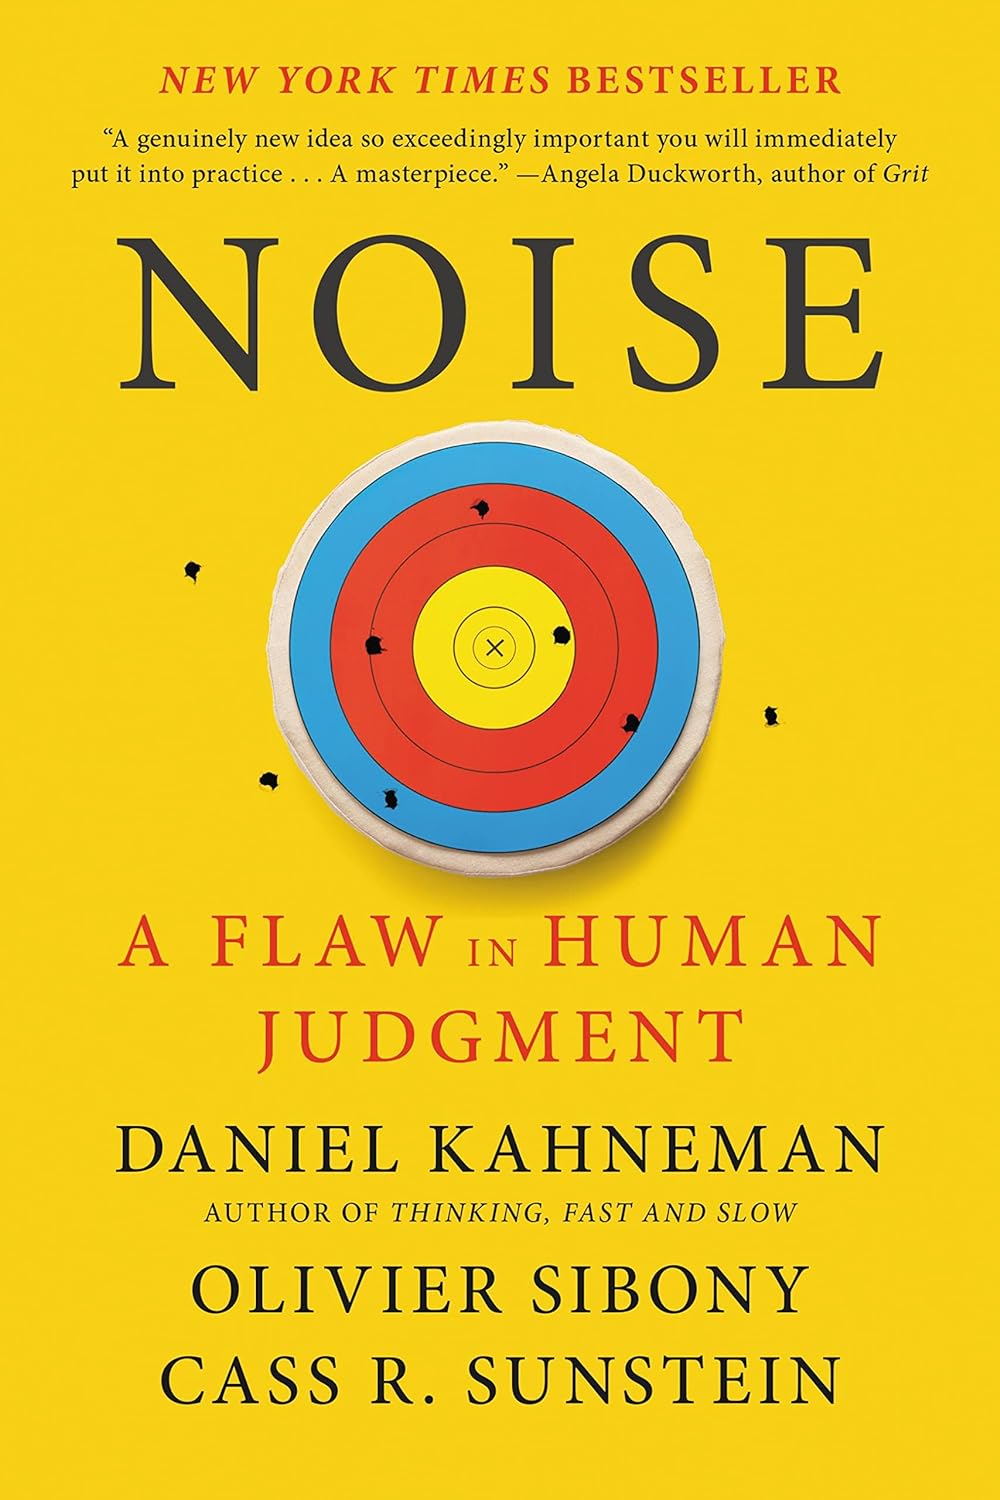 Daniel Kahneman, Cass Sunstein, Olivier Sibony: Noise: A Flaw in Human Judgment (2021, Little, Brown Spark)